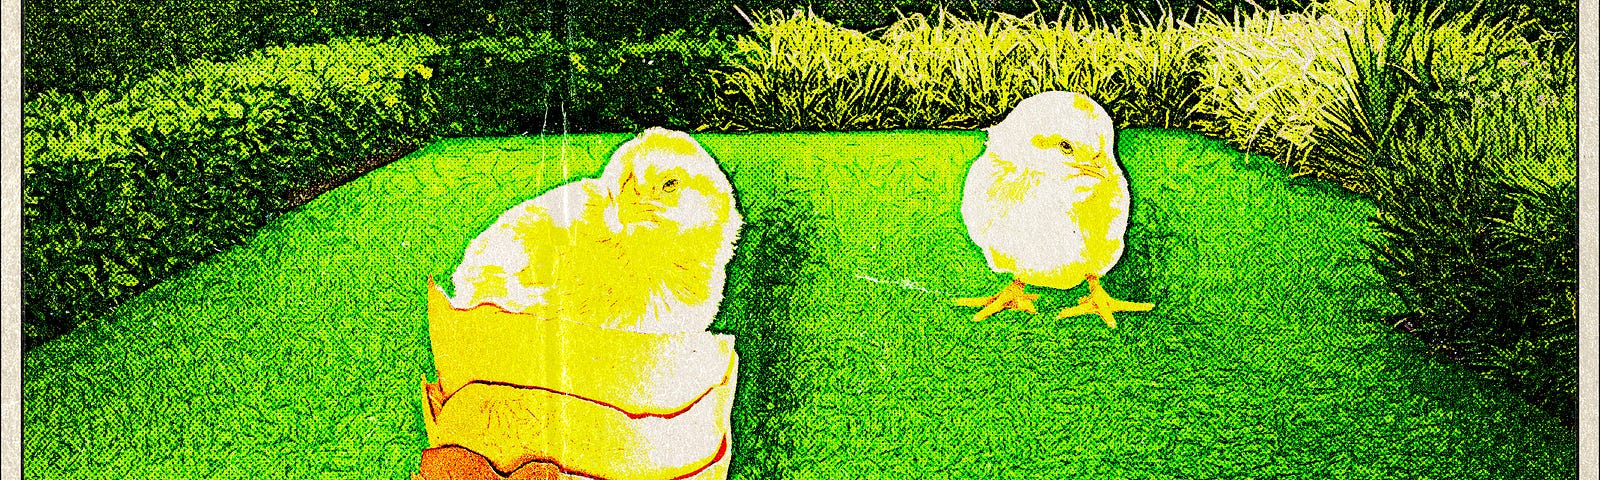 Chicks in back yard